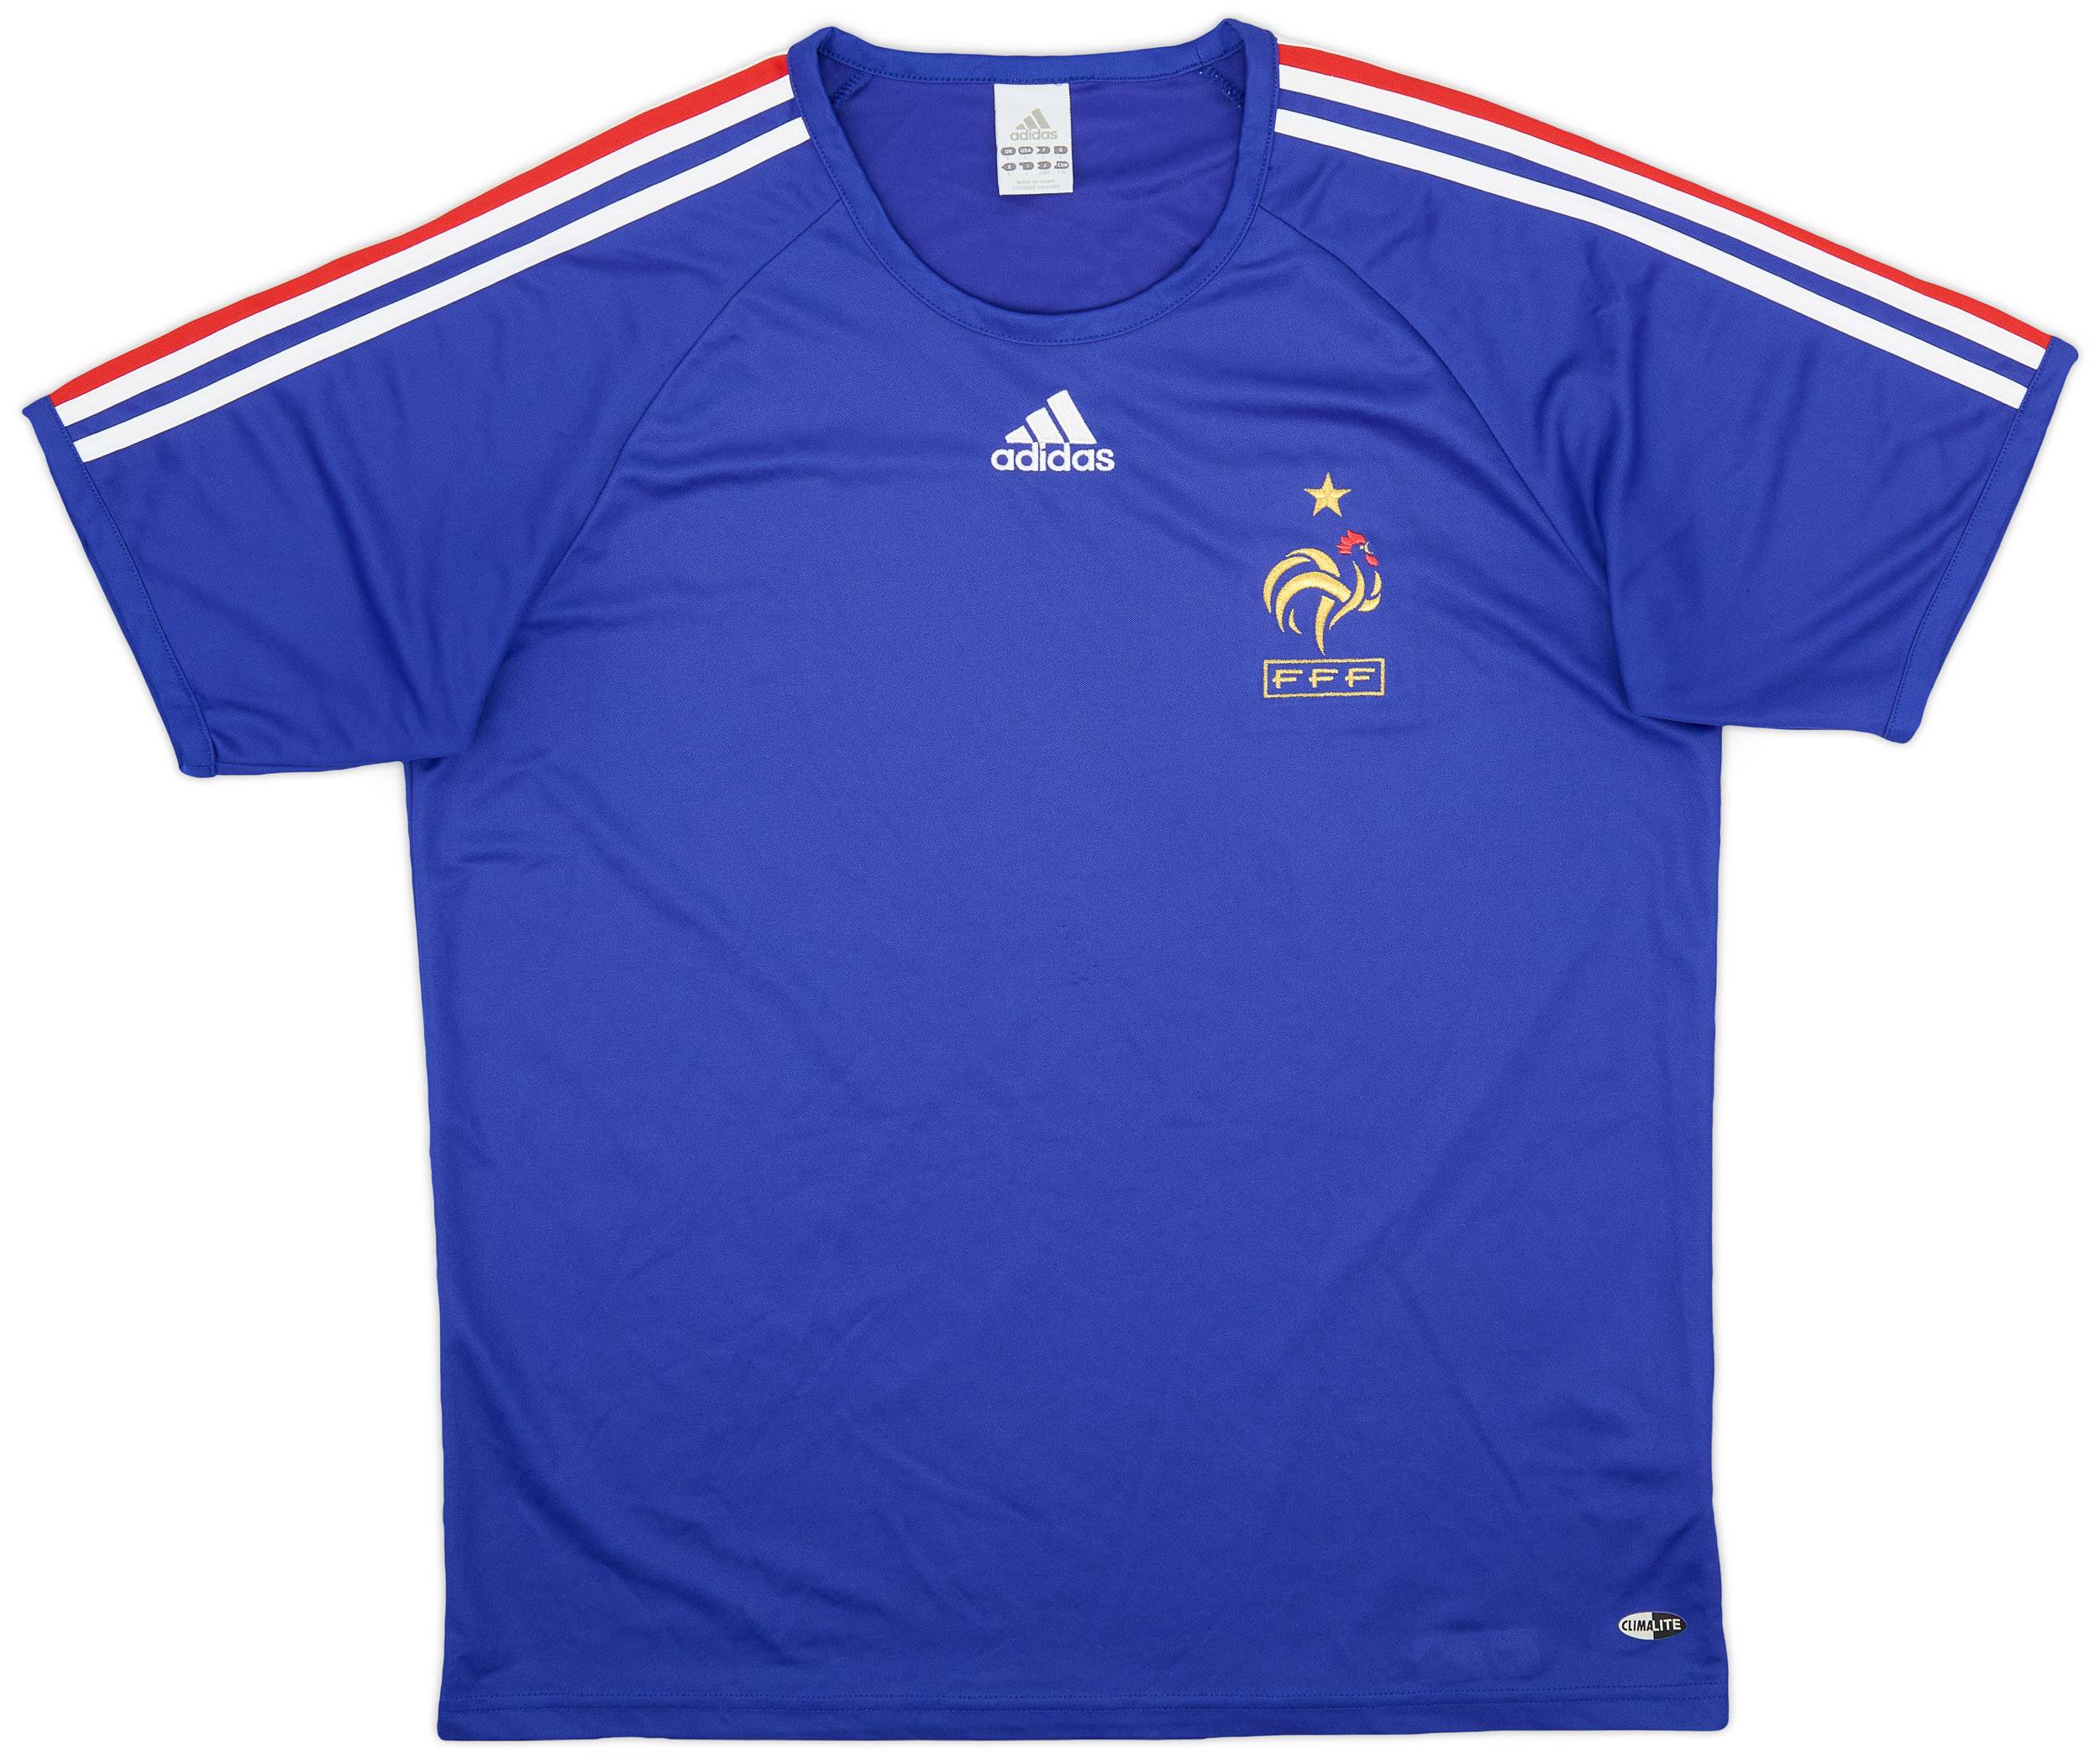 2006-08 France adidas Training Shirt - 9/10 - (L)